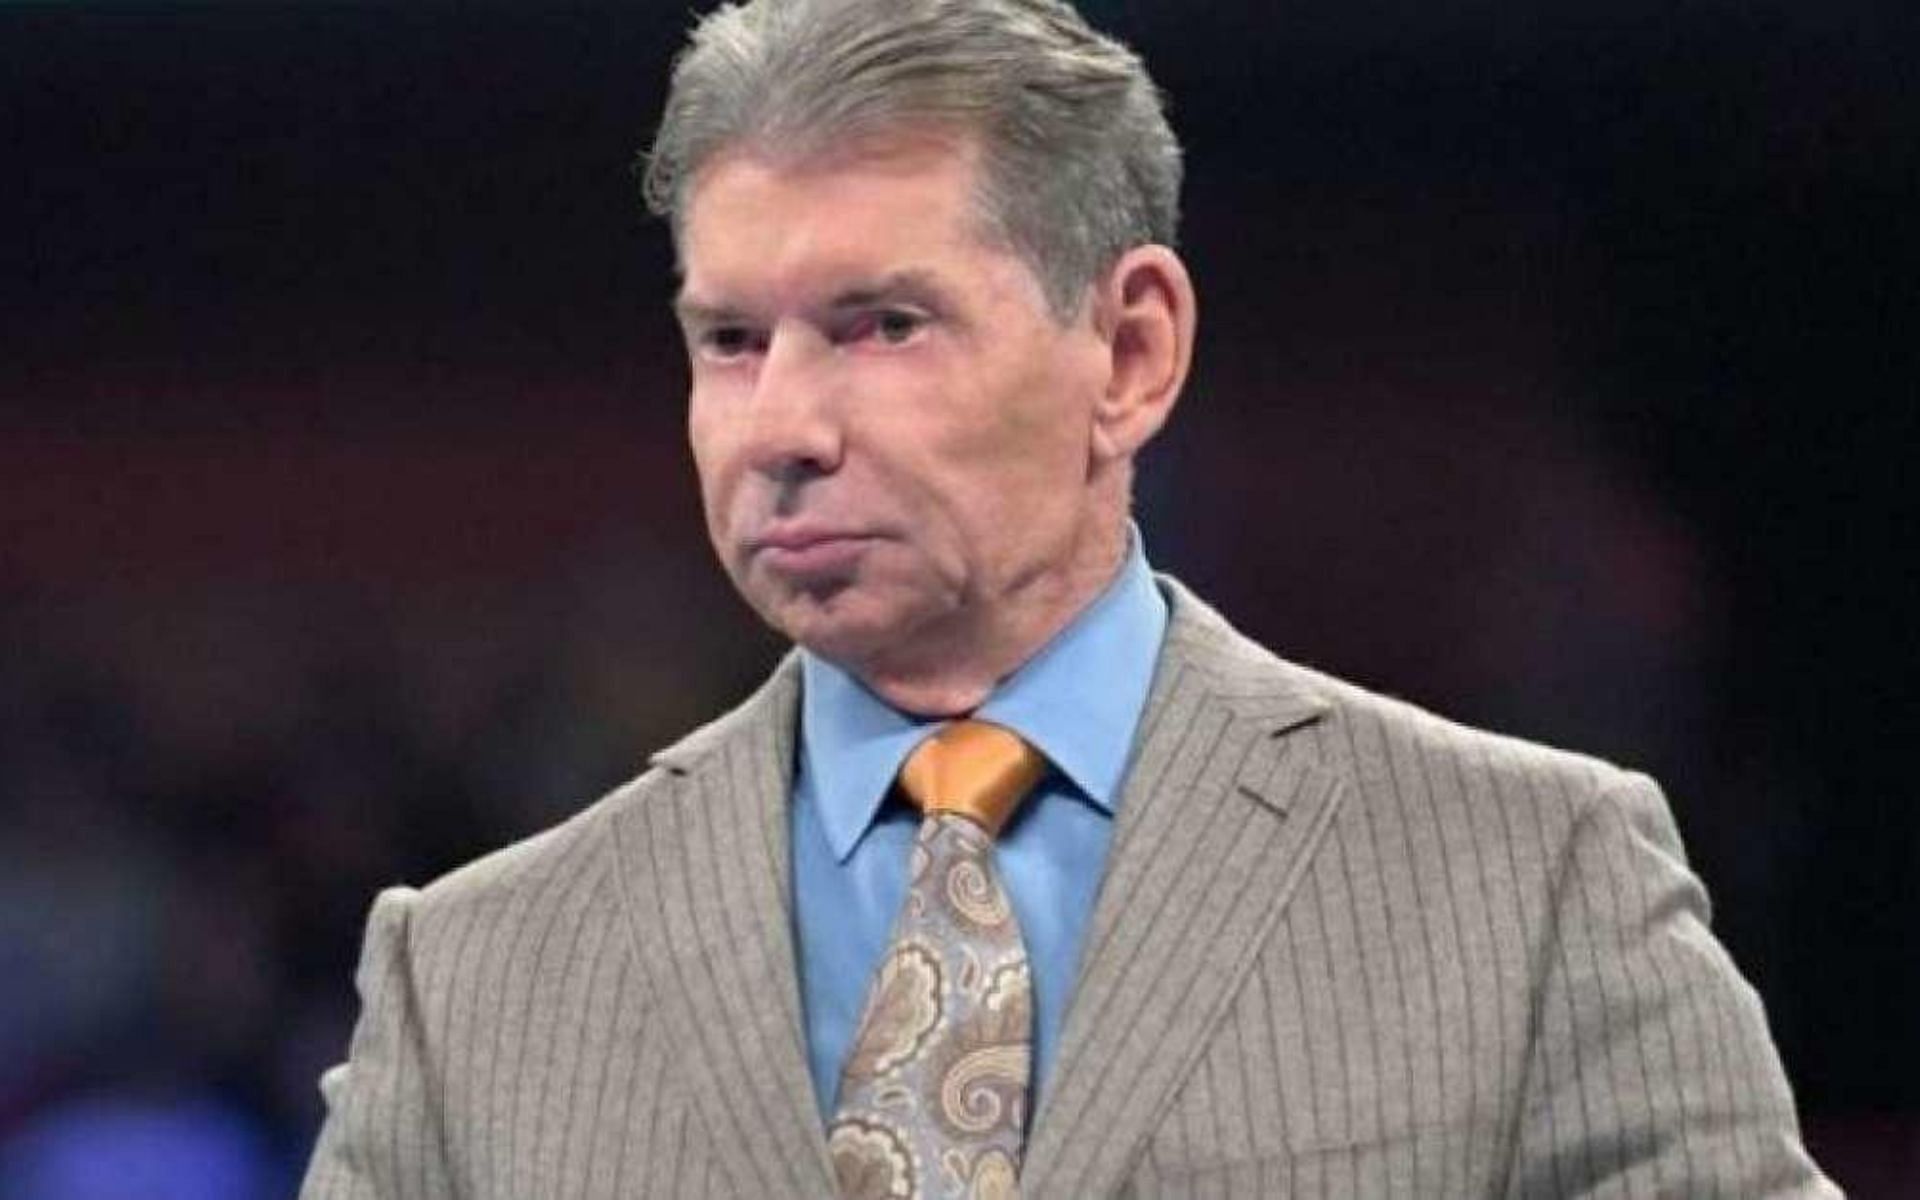 Former WWE Chairman, Vince McMahon